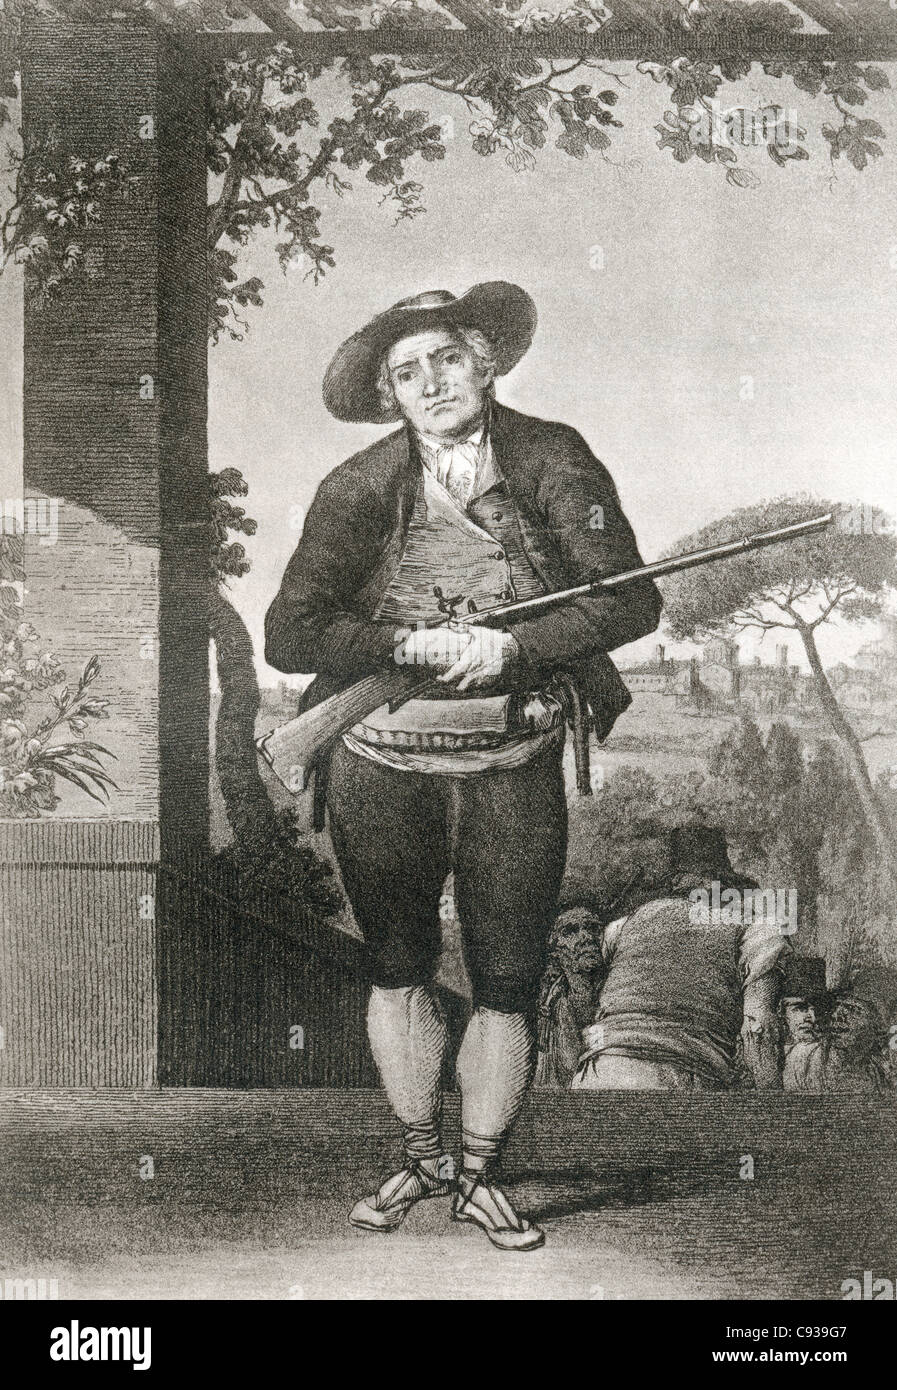 Jorge Ibor y Casamayor, 1755 - 1808, aka Tío Jorge. Ben noto la figura che hanno combattuto in assedio di Saragozza. Foto Stock